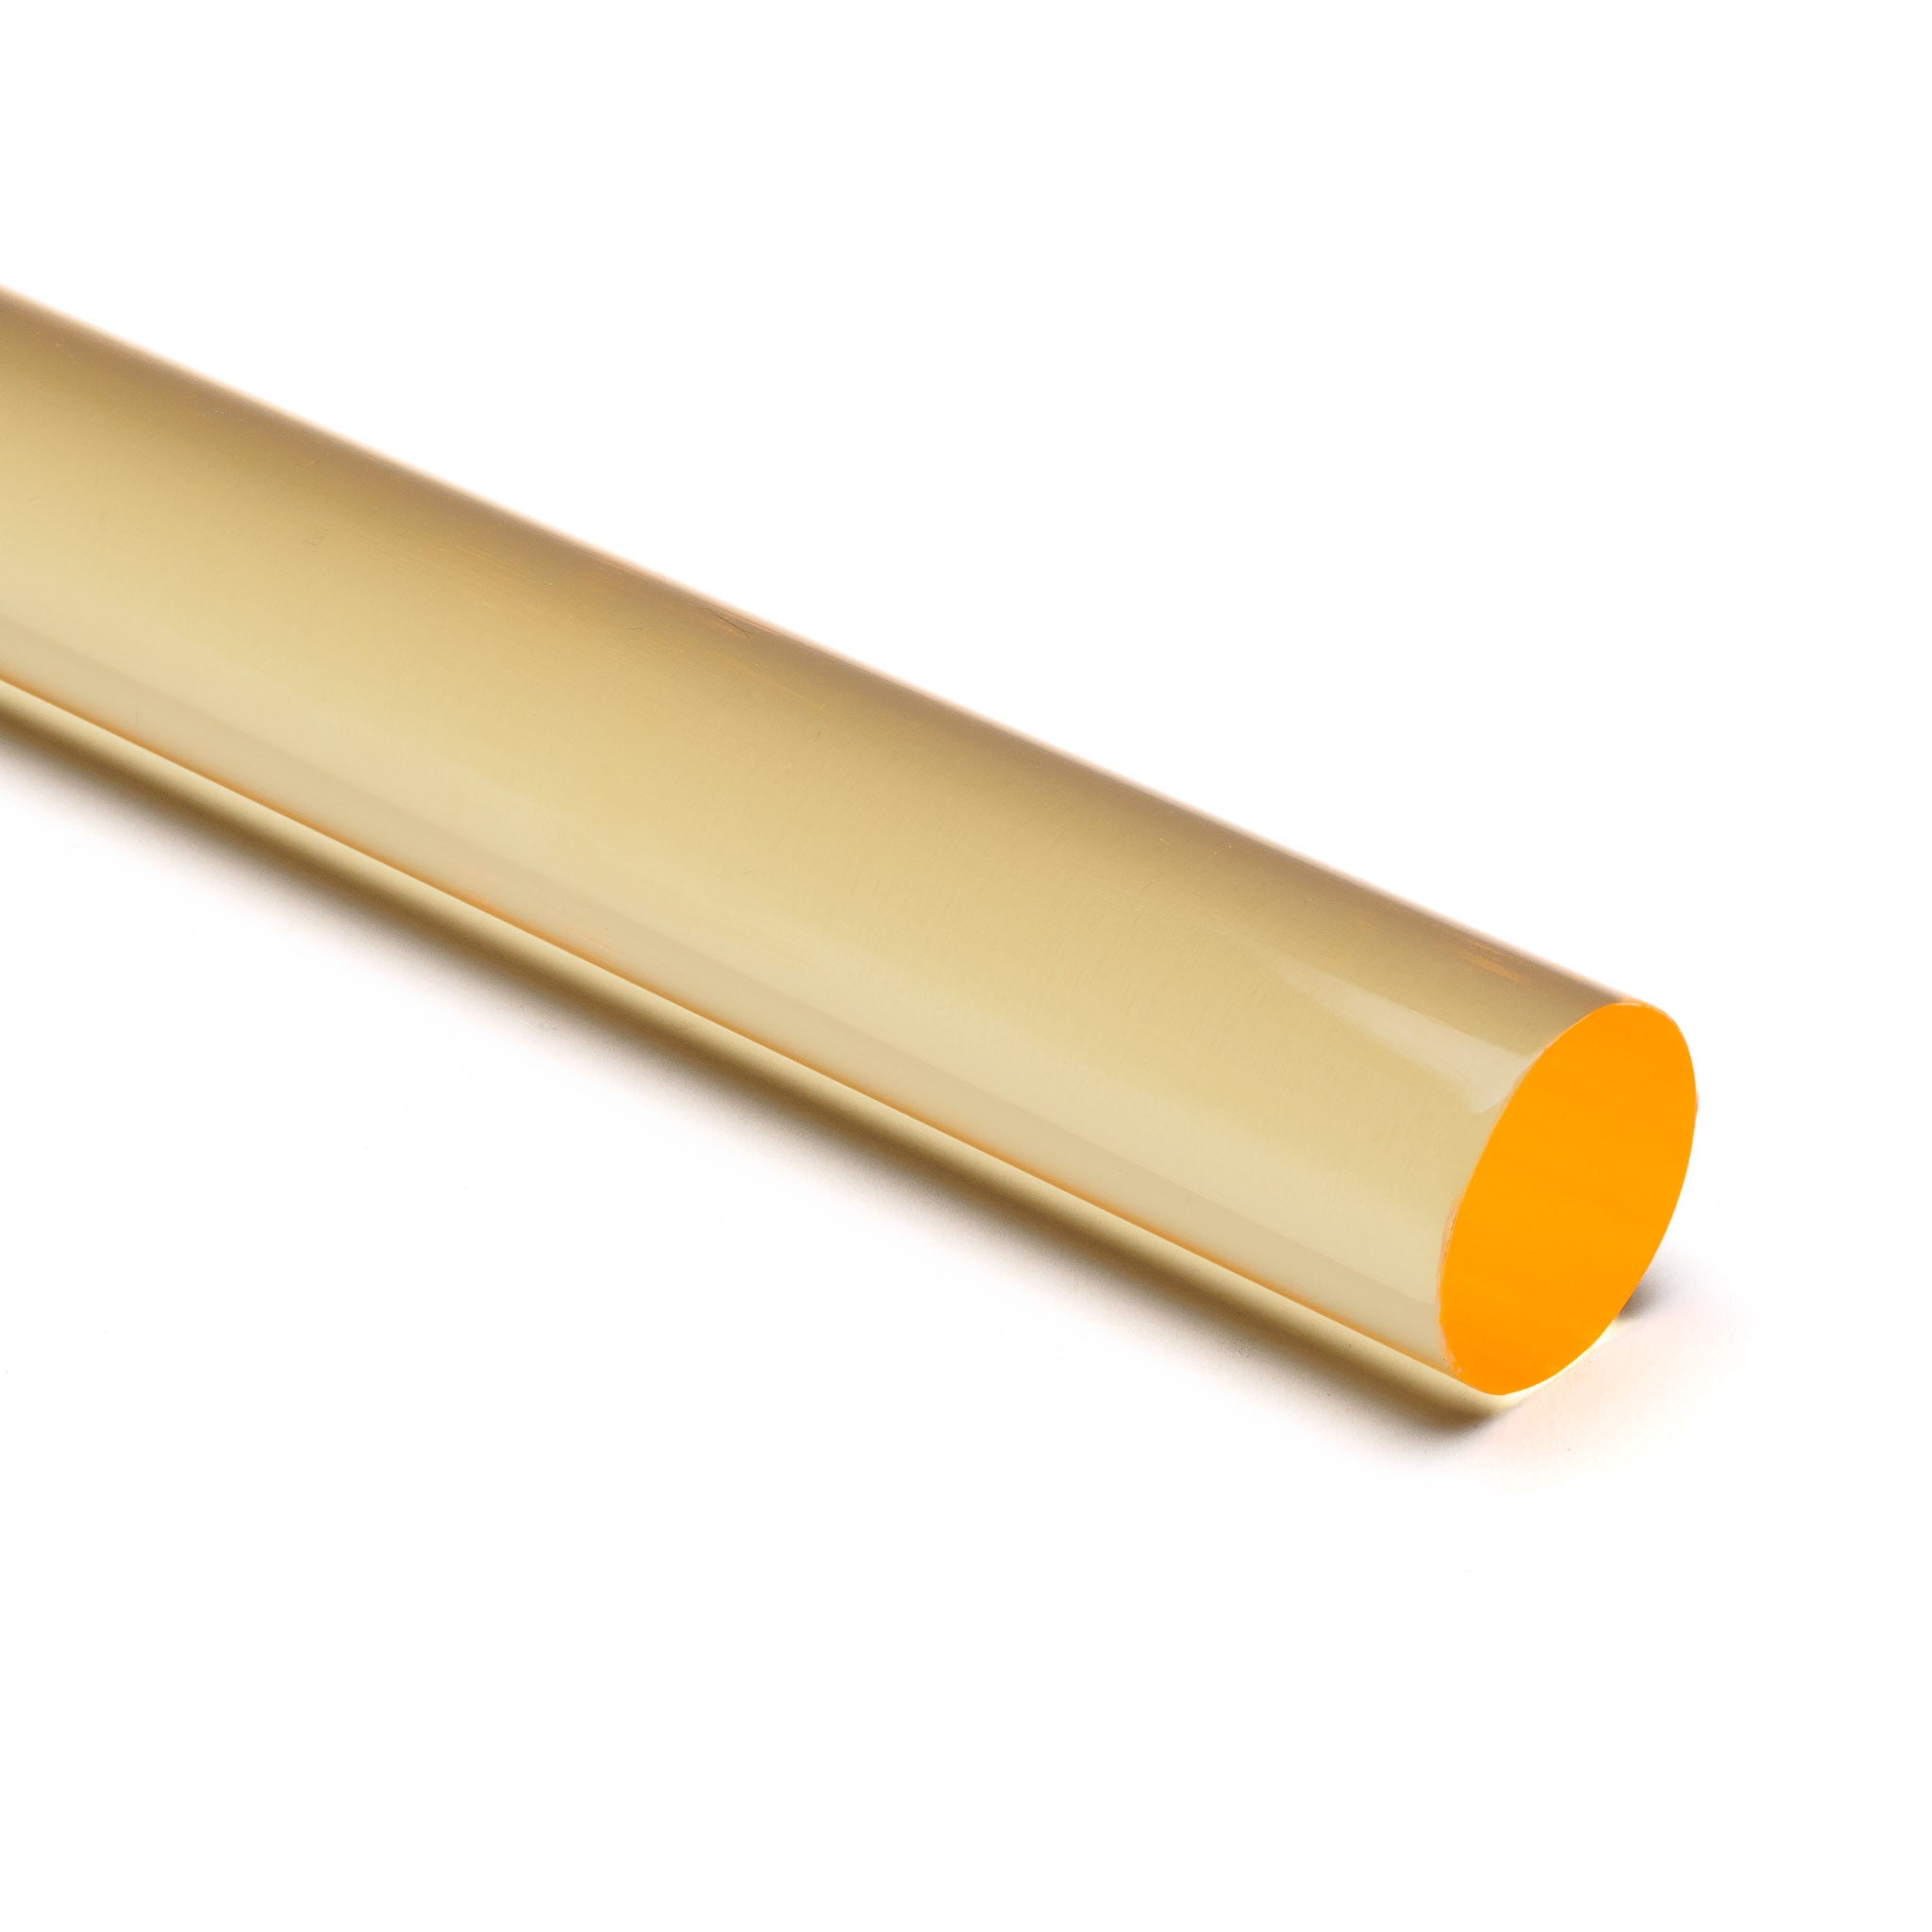 Gold Glitter Acrylic Plexiglass Sheet  Canal Plastics – Canal Plastics  Center